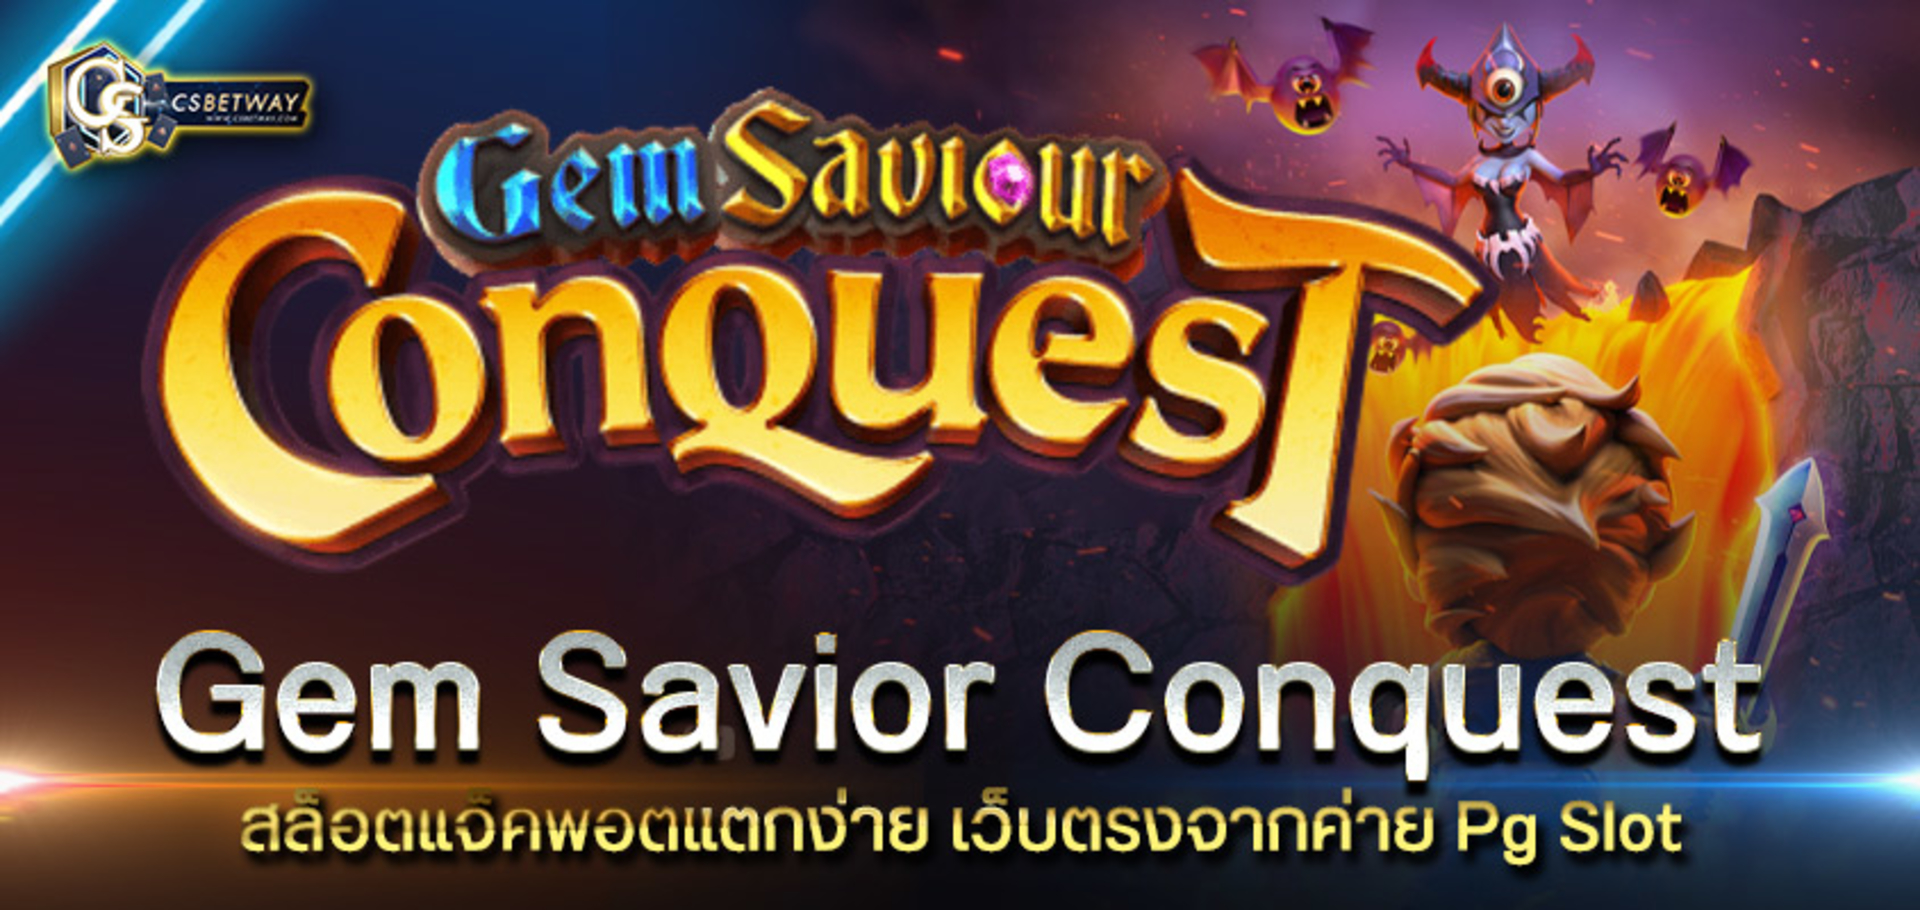 Gem Saviour Conquest ผู้พิชิตอัญมณี เกมสล็อตออนไลน์ มาแรง จากค่าย PG Slot แตกง่าย ได้บ่อย ต้องลอง! สล็อตพีจี PGสล็อต